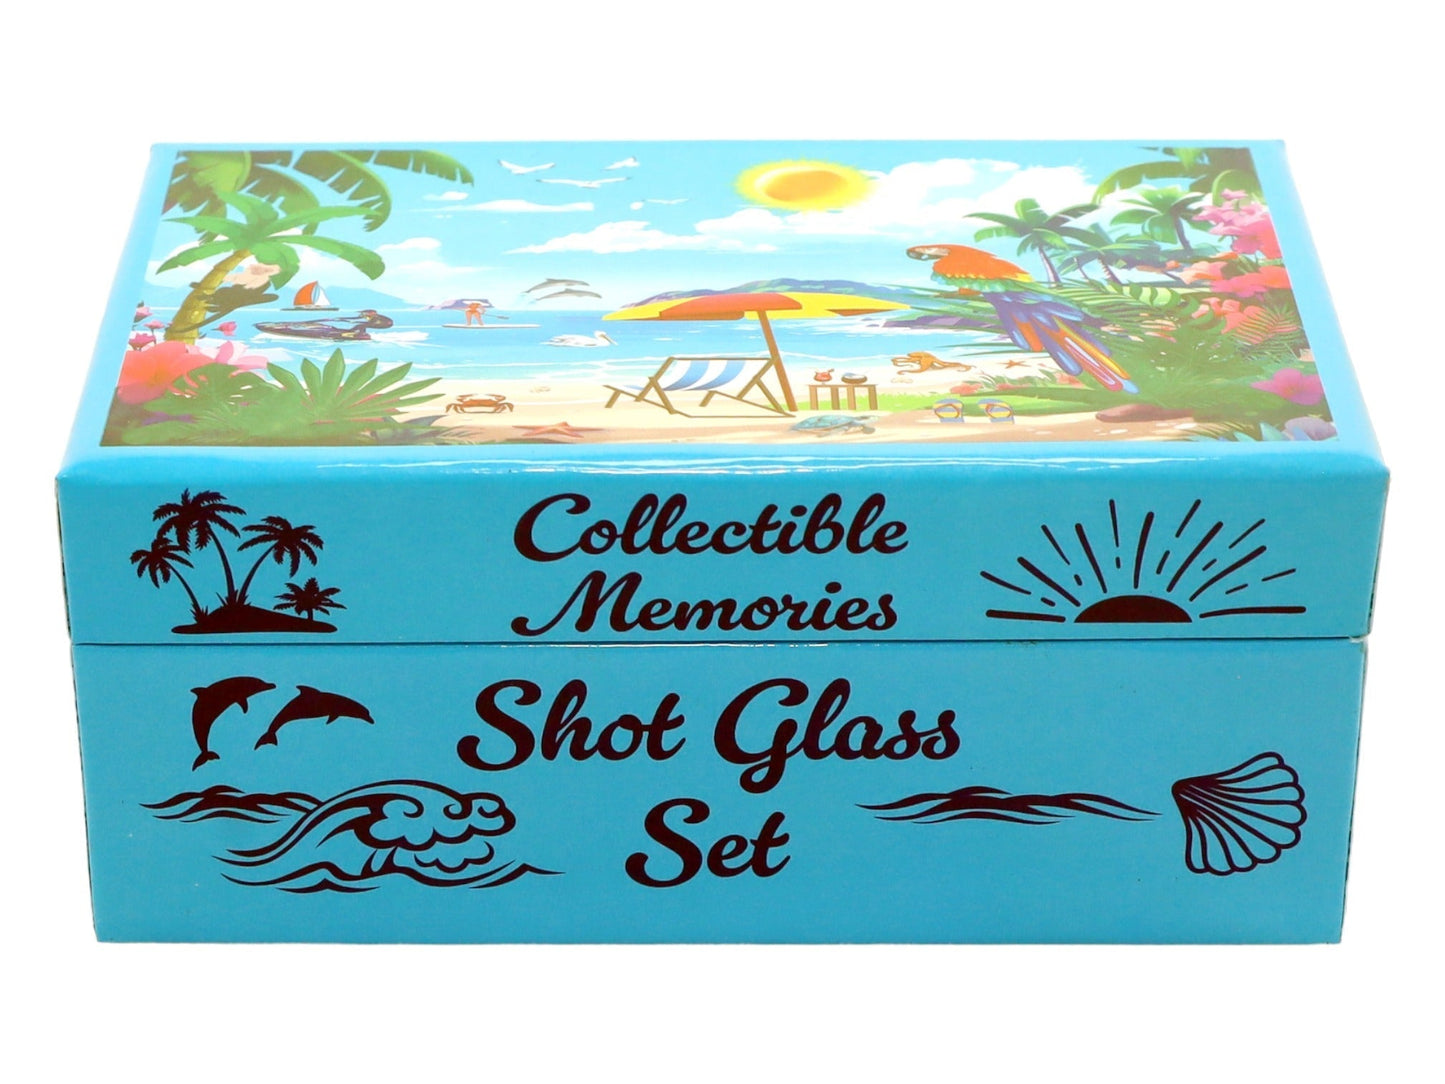 Antigua & Barbuda Caribbean Shot Glass Boxed Set (Set of 2)